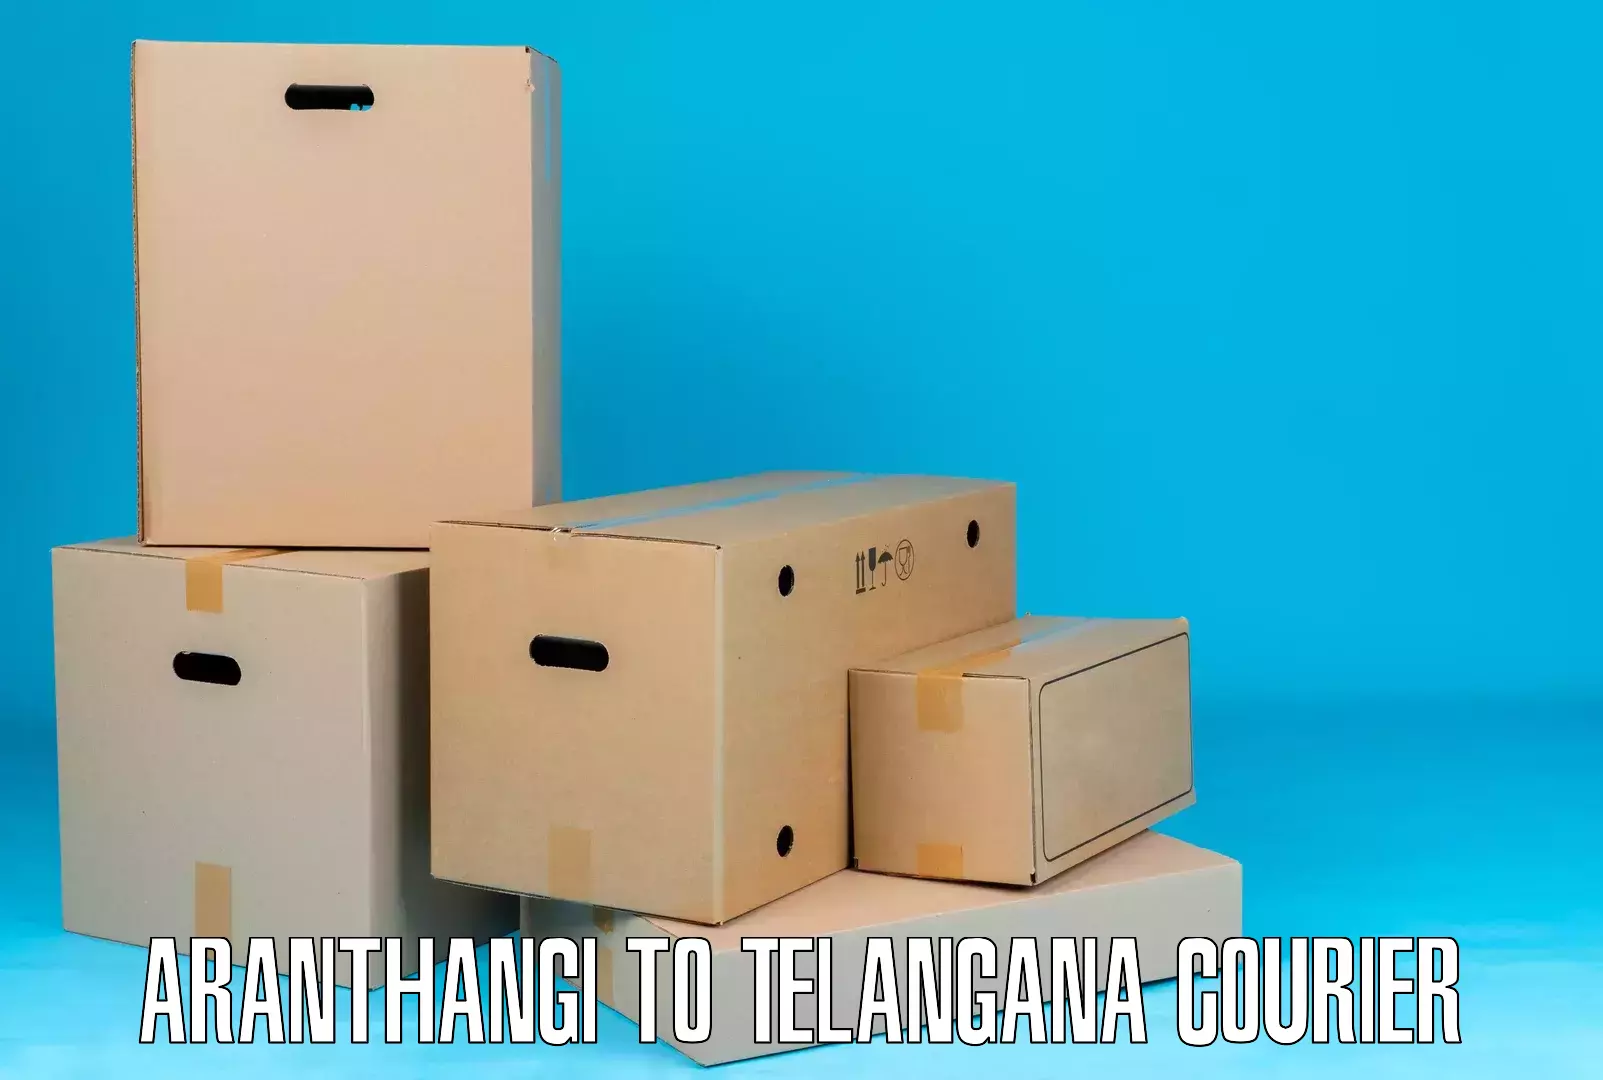 Supply chain efficiency Aranthangi to University of Hyderabad